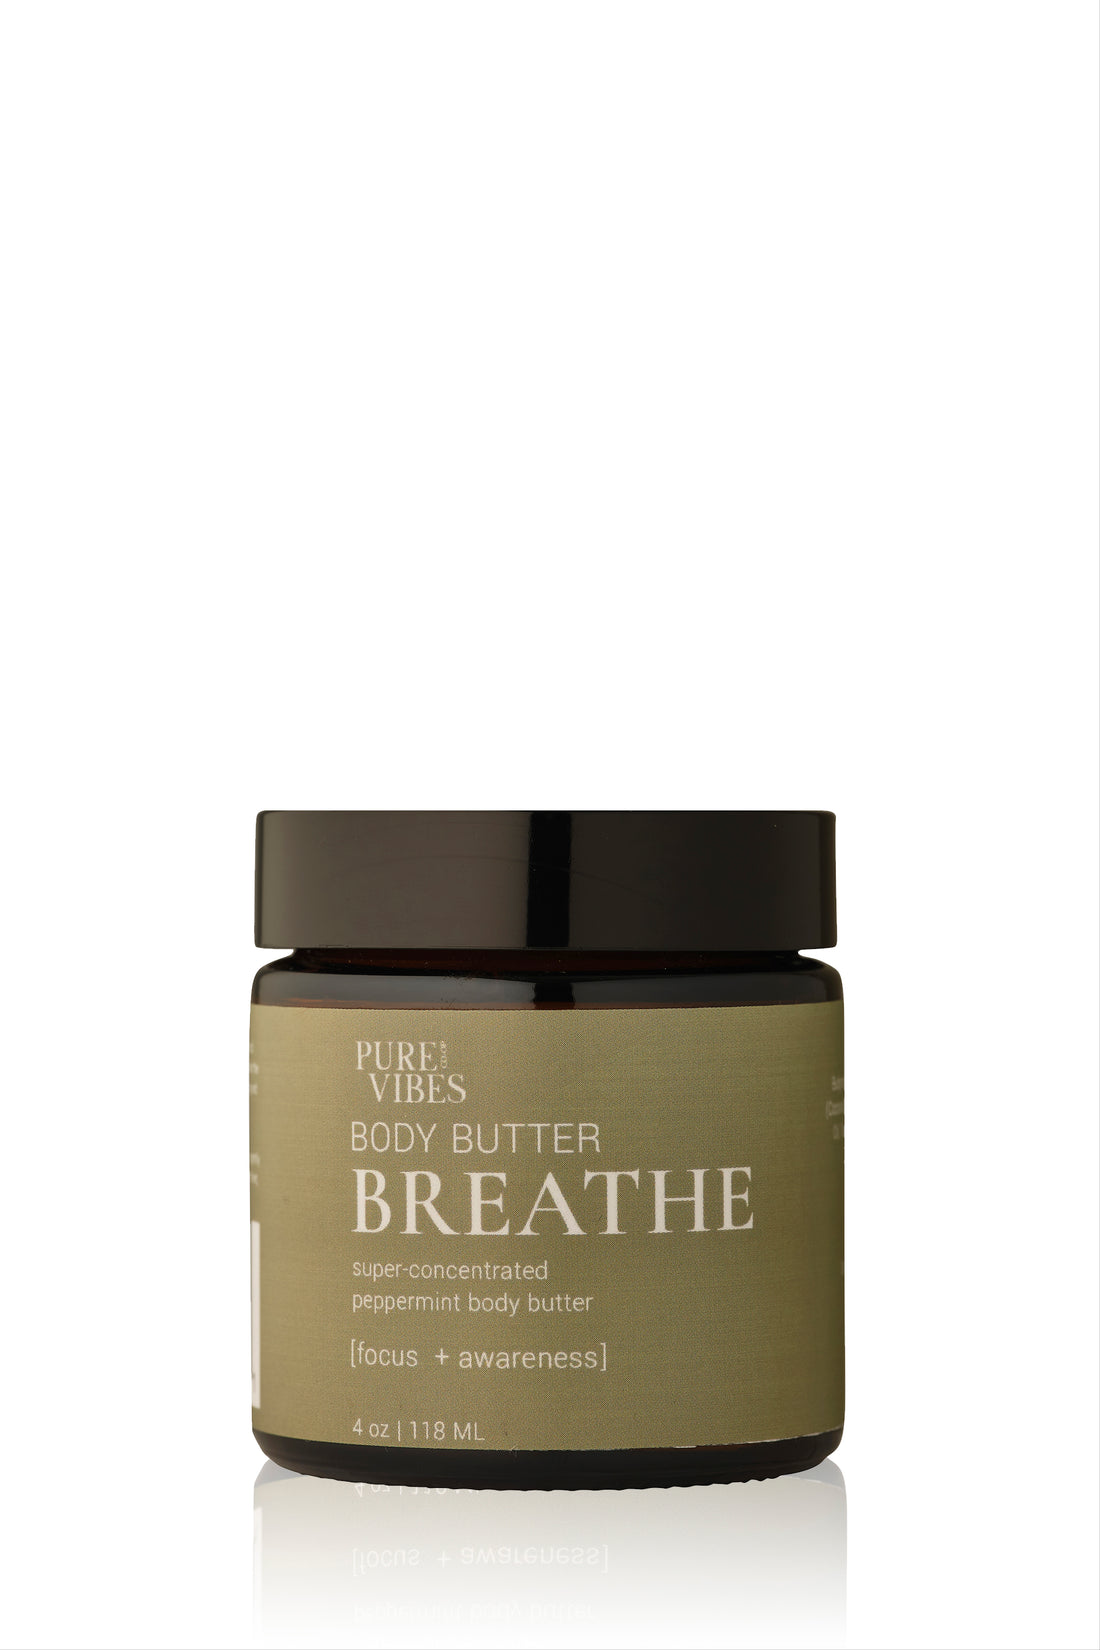 Breathe Body Butter